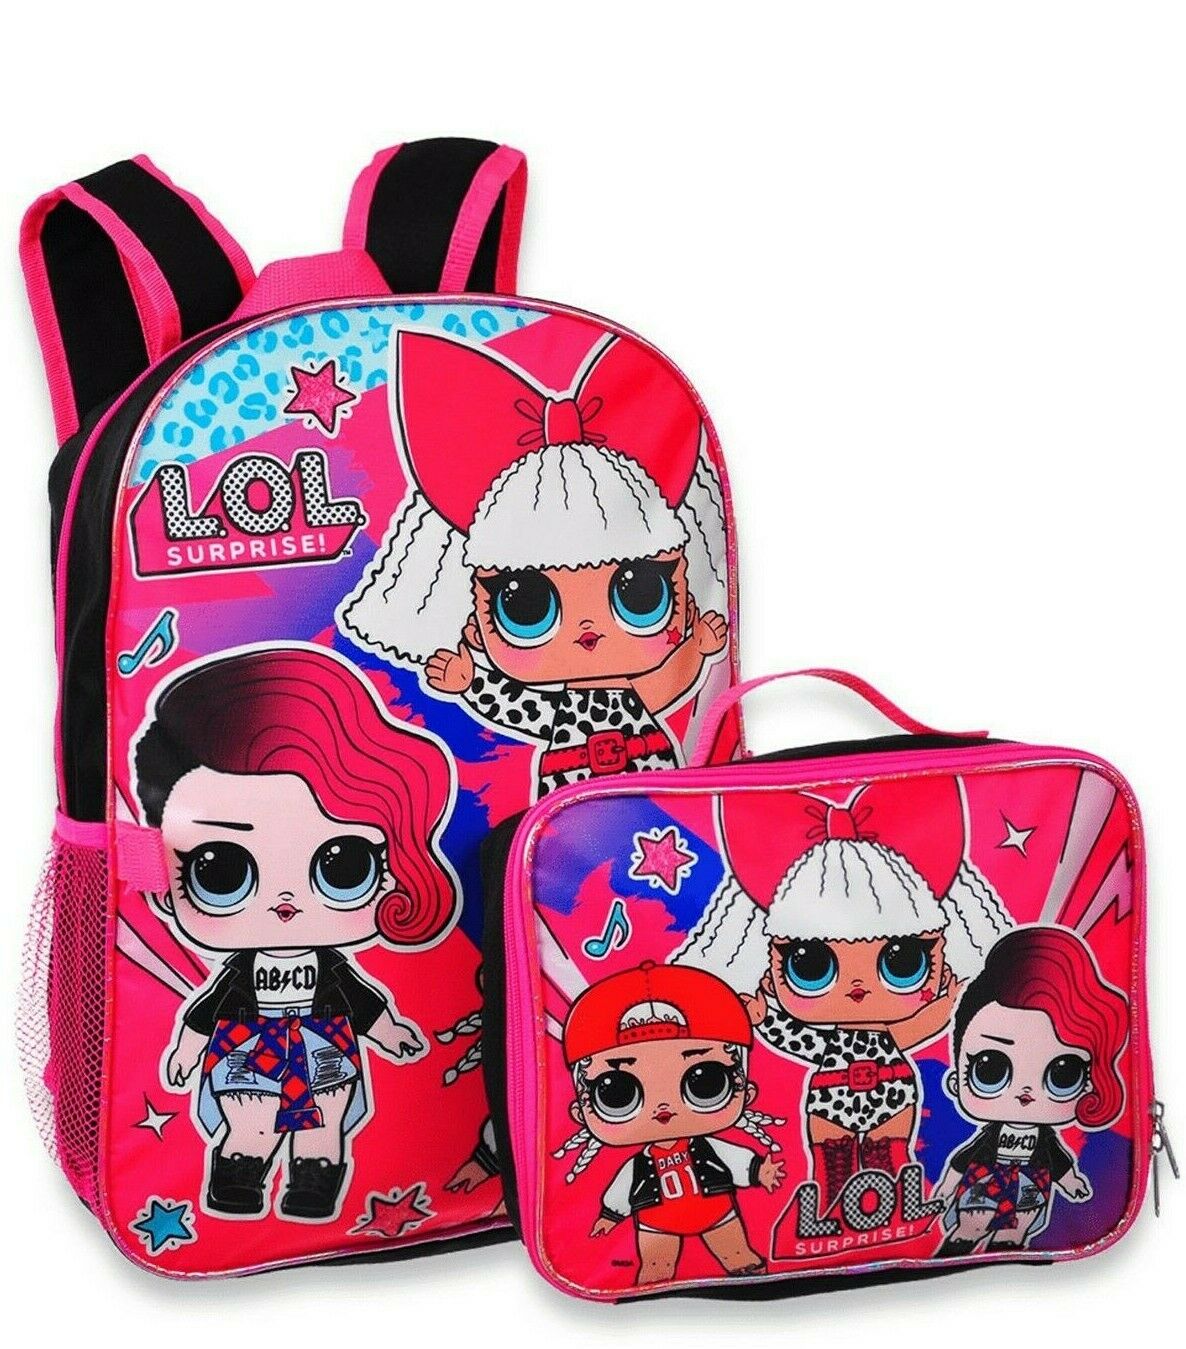 L.o.l. Surprise Lol Girls Cute School Book Bag Backpack Lunch Box Doll Kids Gift